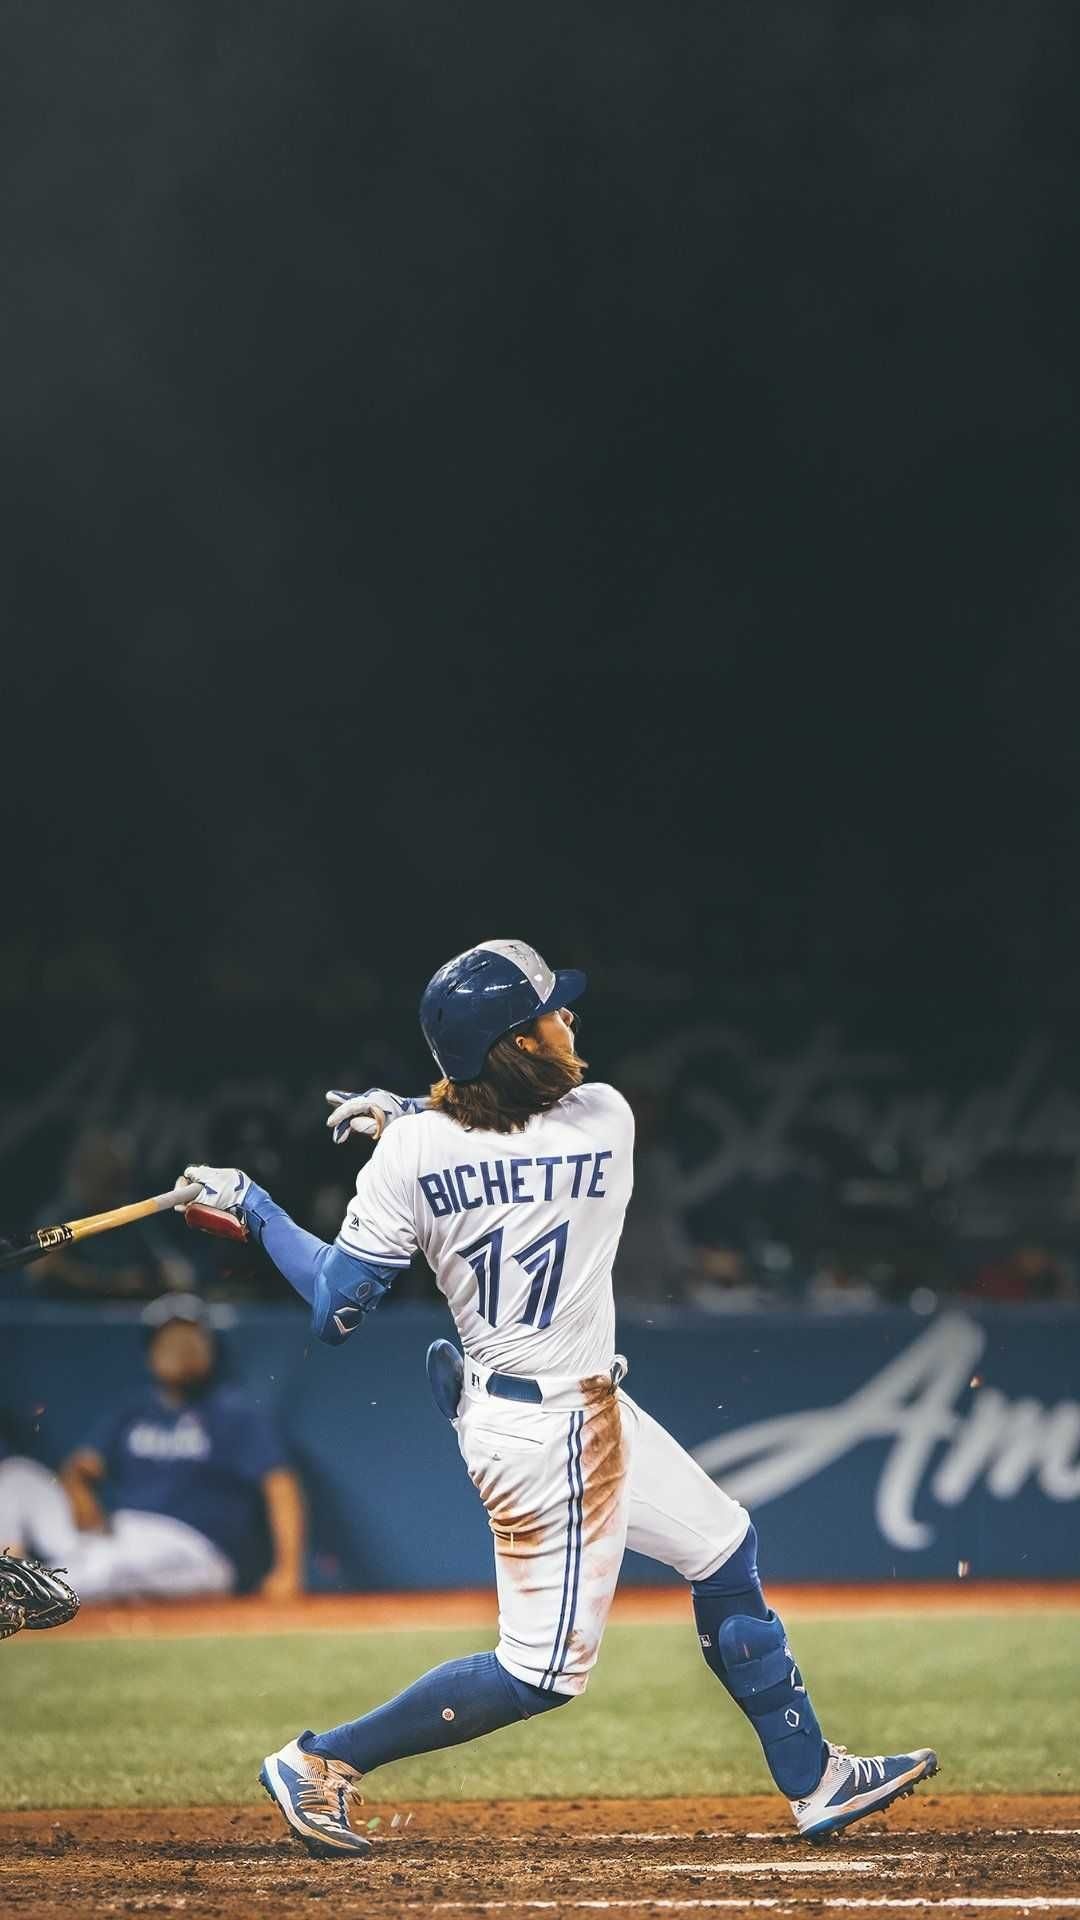 Softball: Bo Joseph Bichette, Toronto Blue Jays, Major League Baseball. 1080x1920 Full HD Wallpaper.